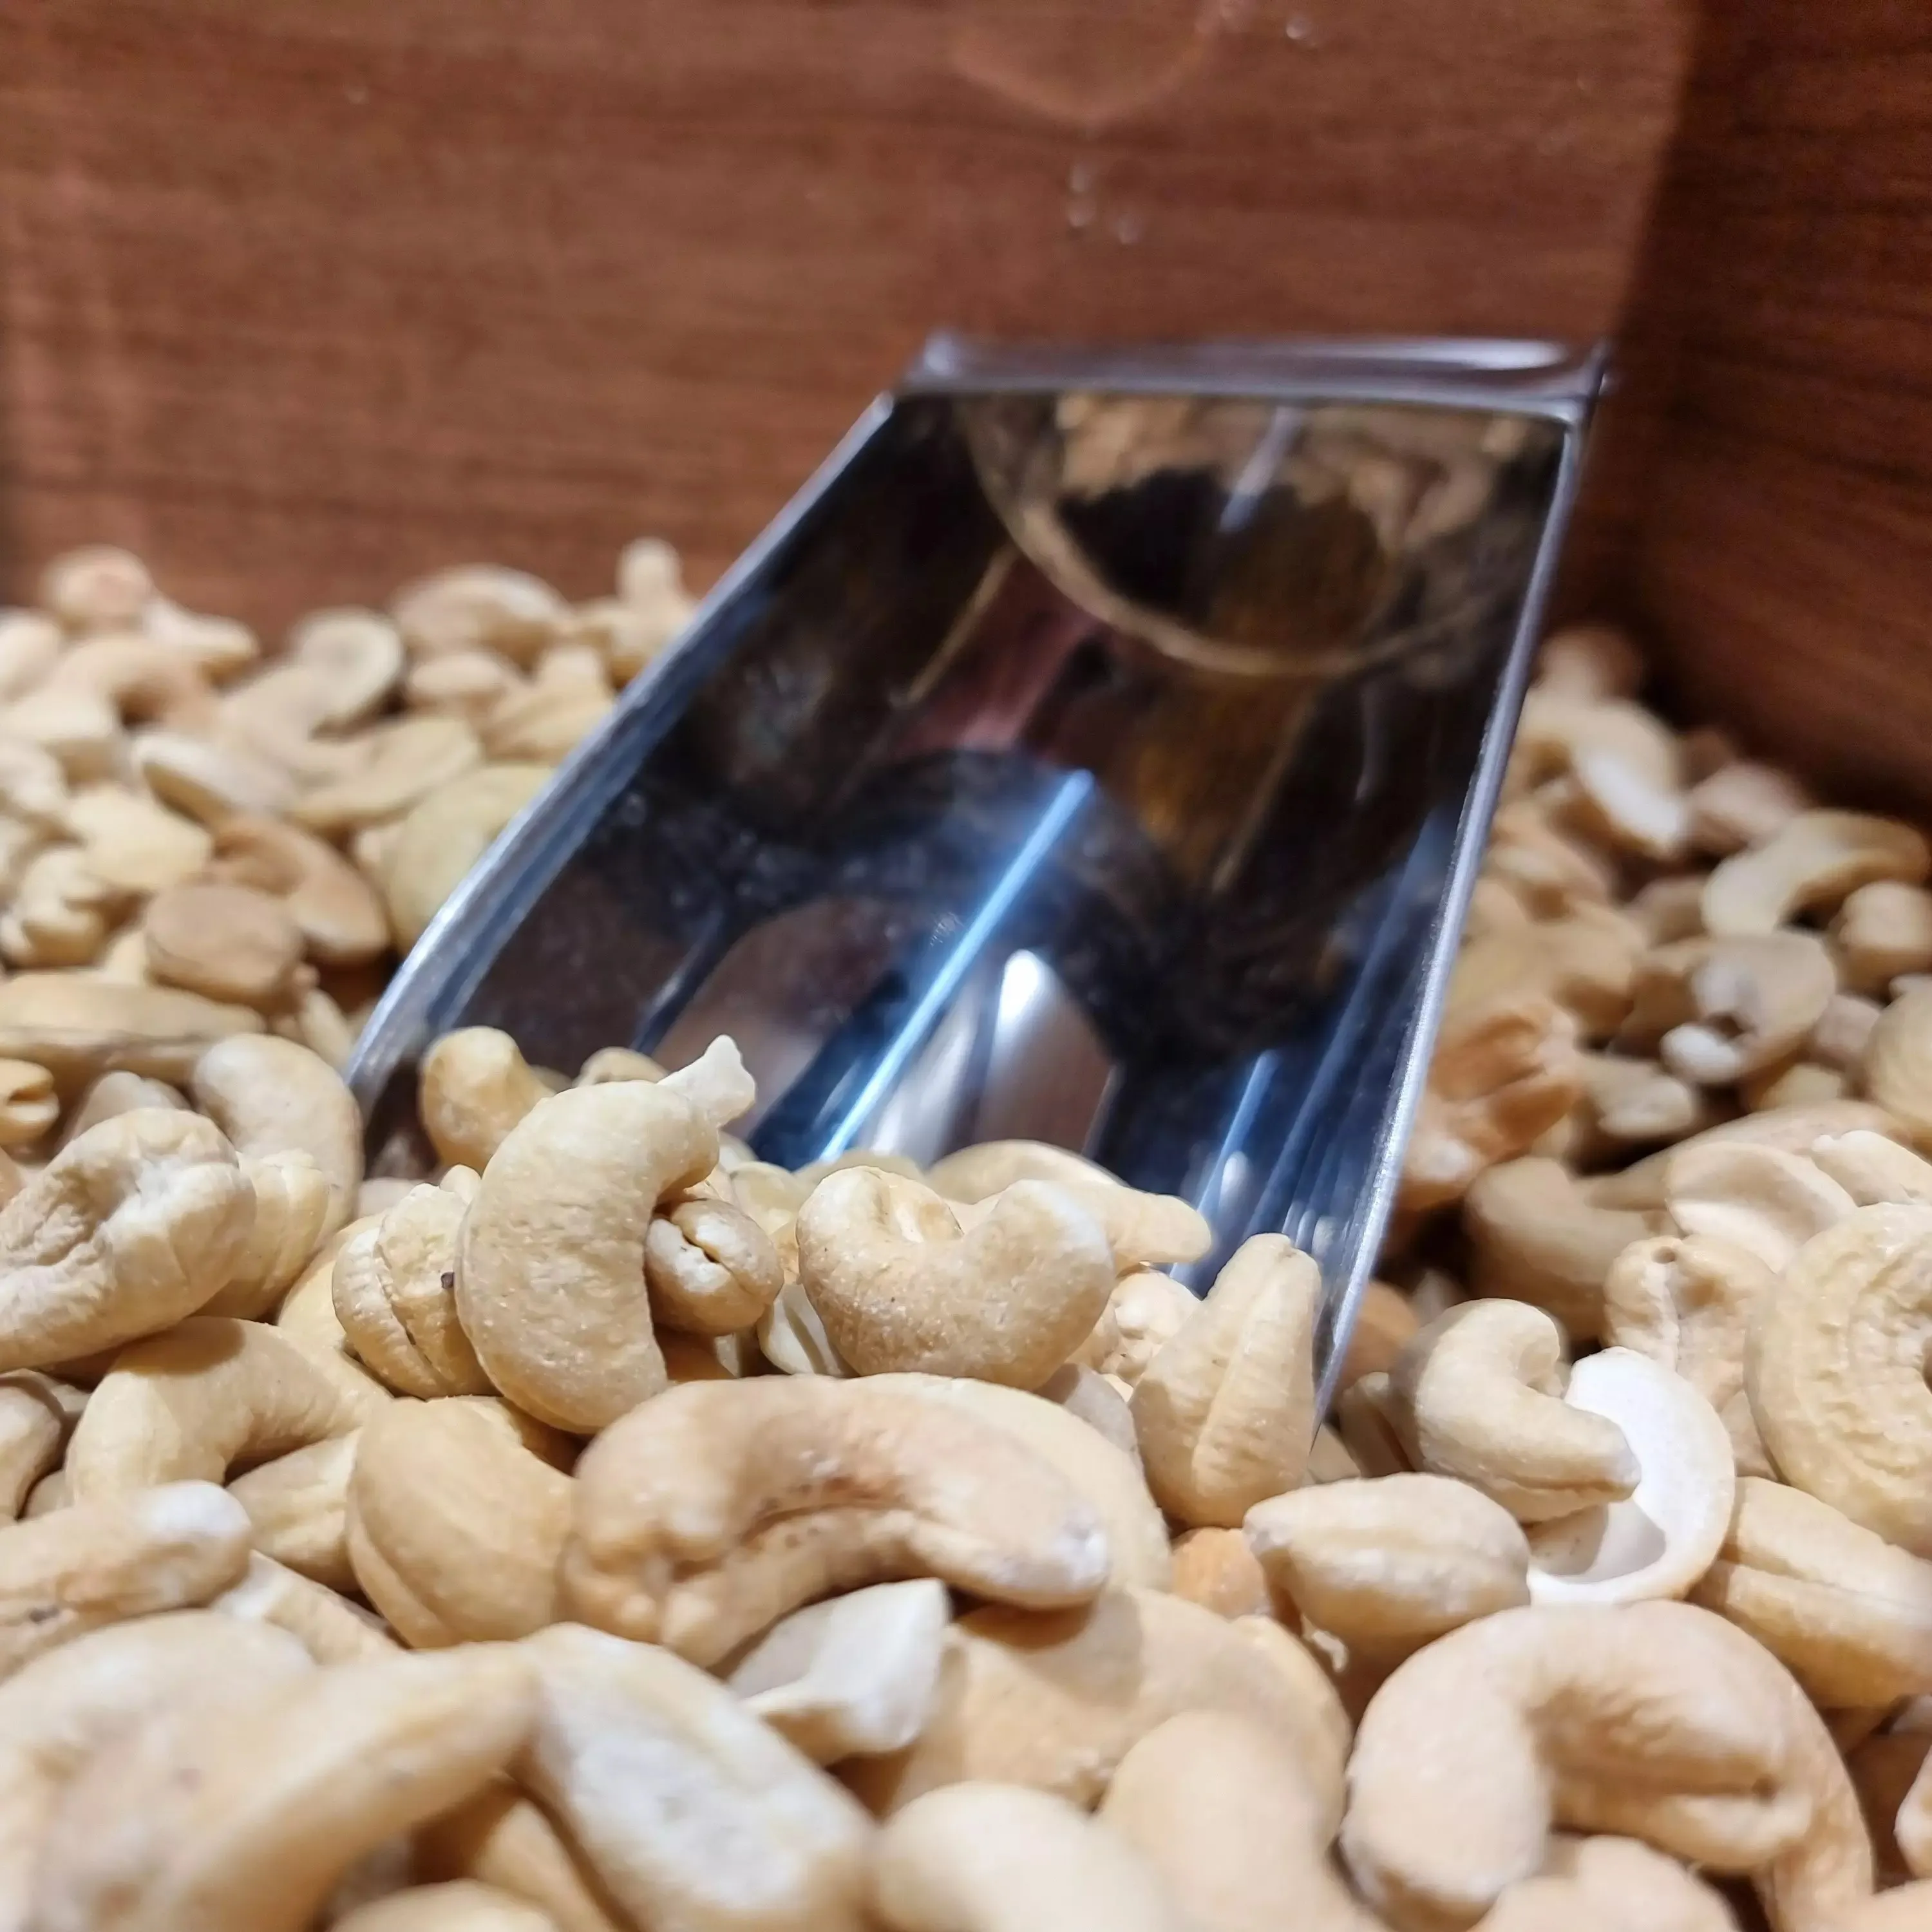 Buy raw cashews bulk Sydney + best price